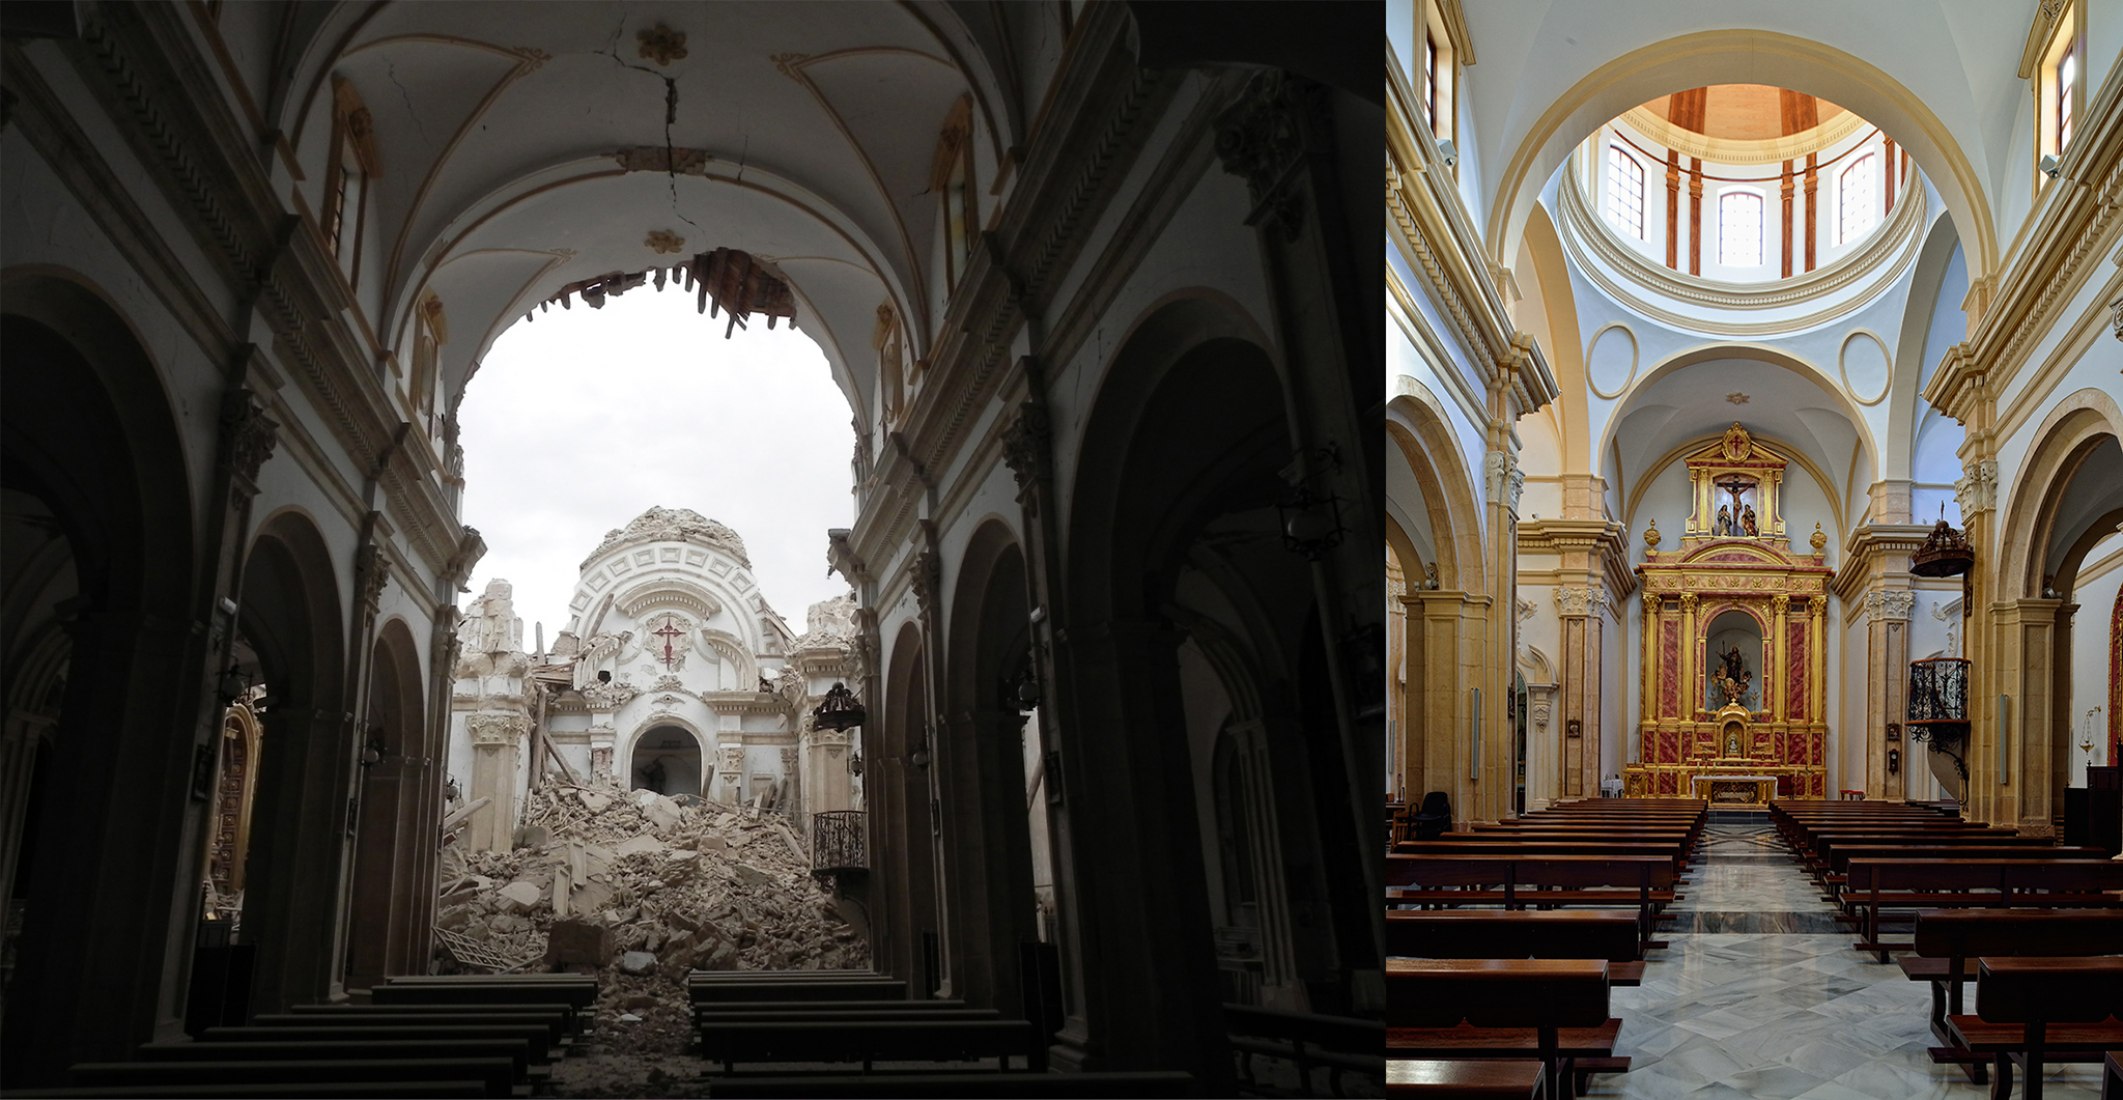 Reconstruction of the Church of Santiago, Lorca, Murcia, by Juan de Dios de la Hoz. Image courtesy of Rafael Manzano Award